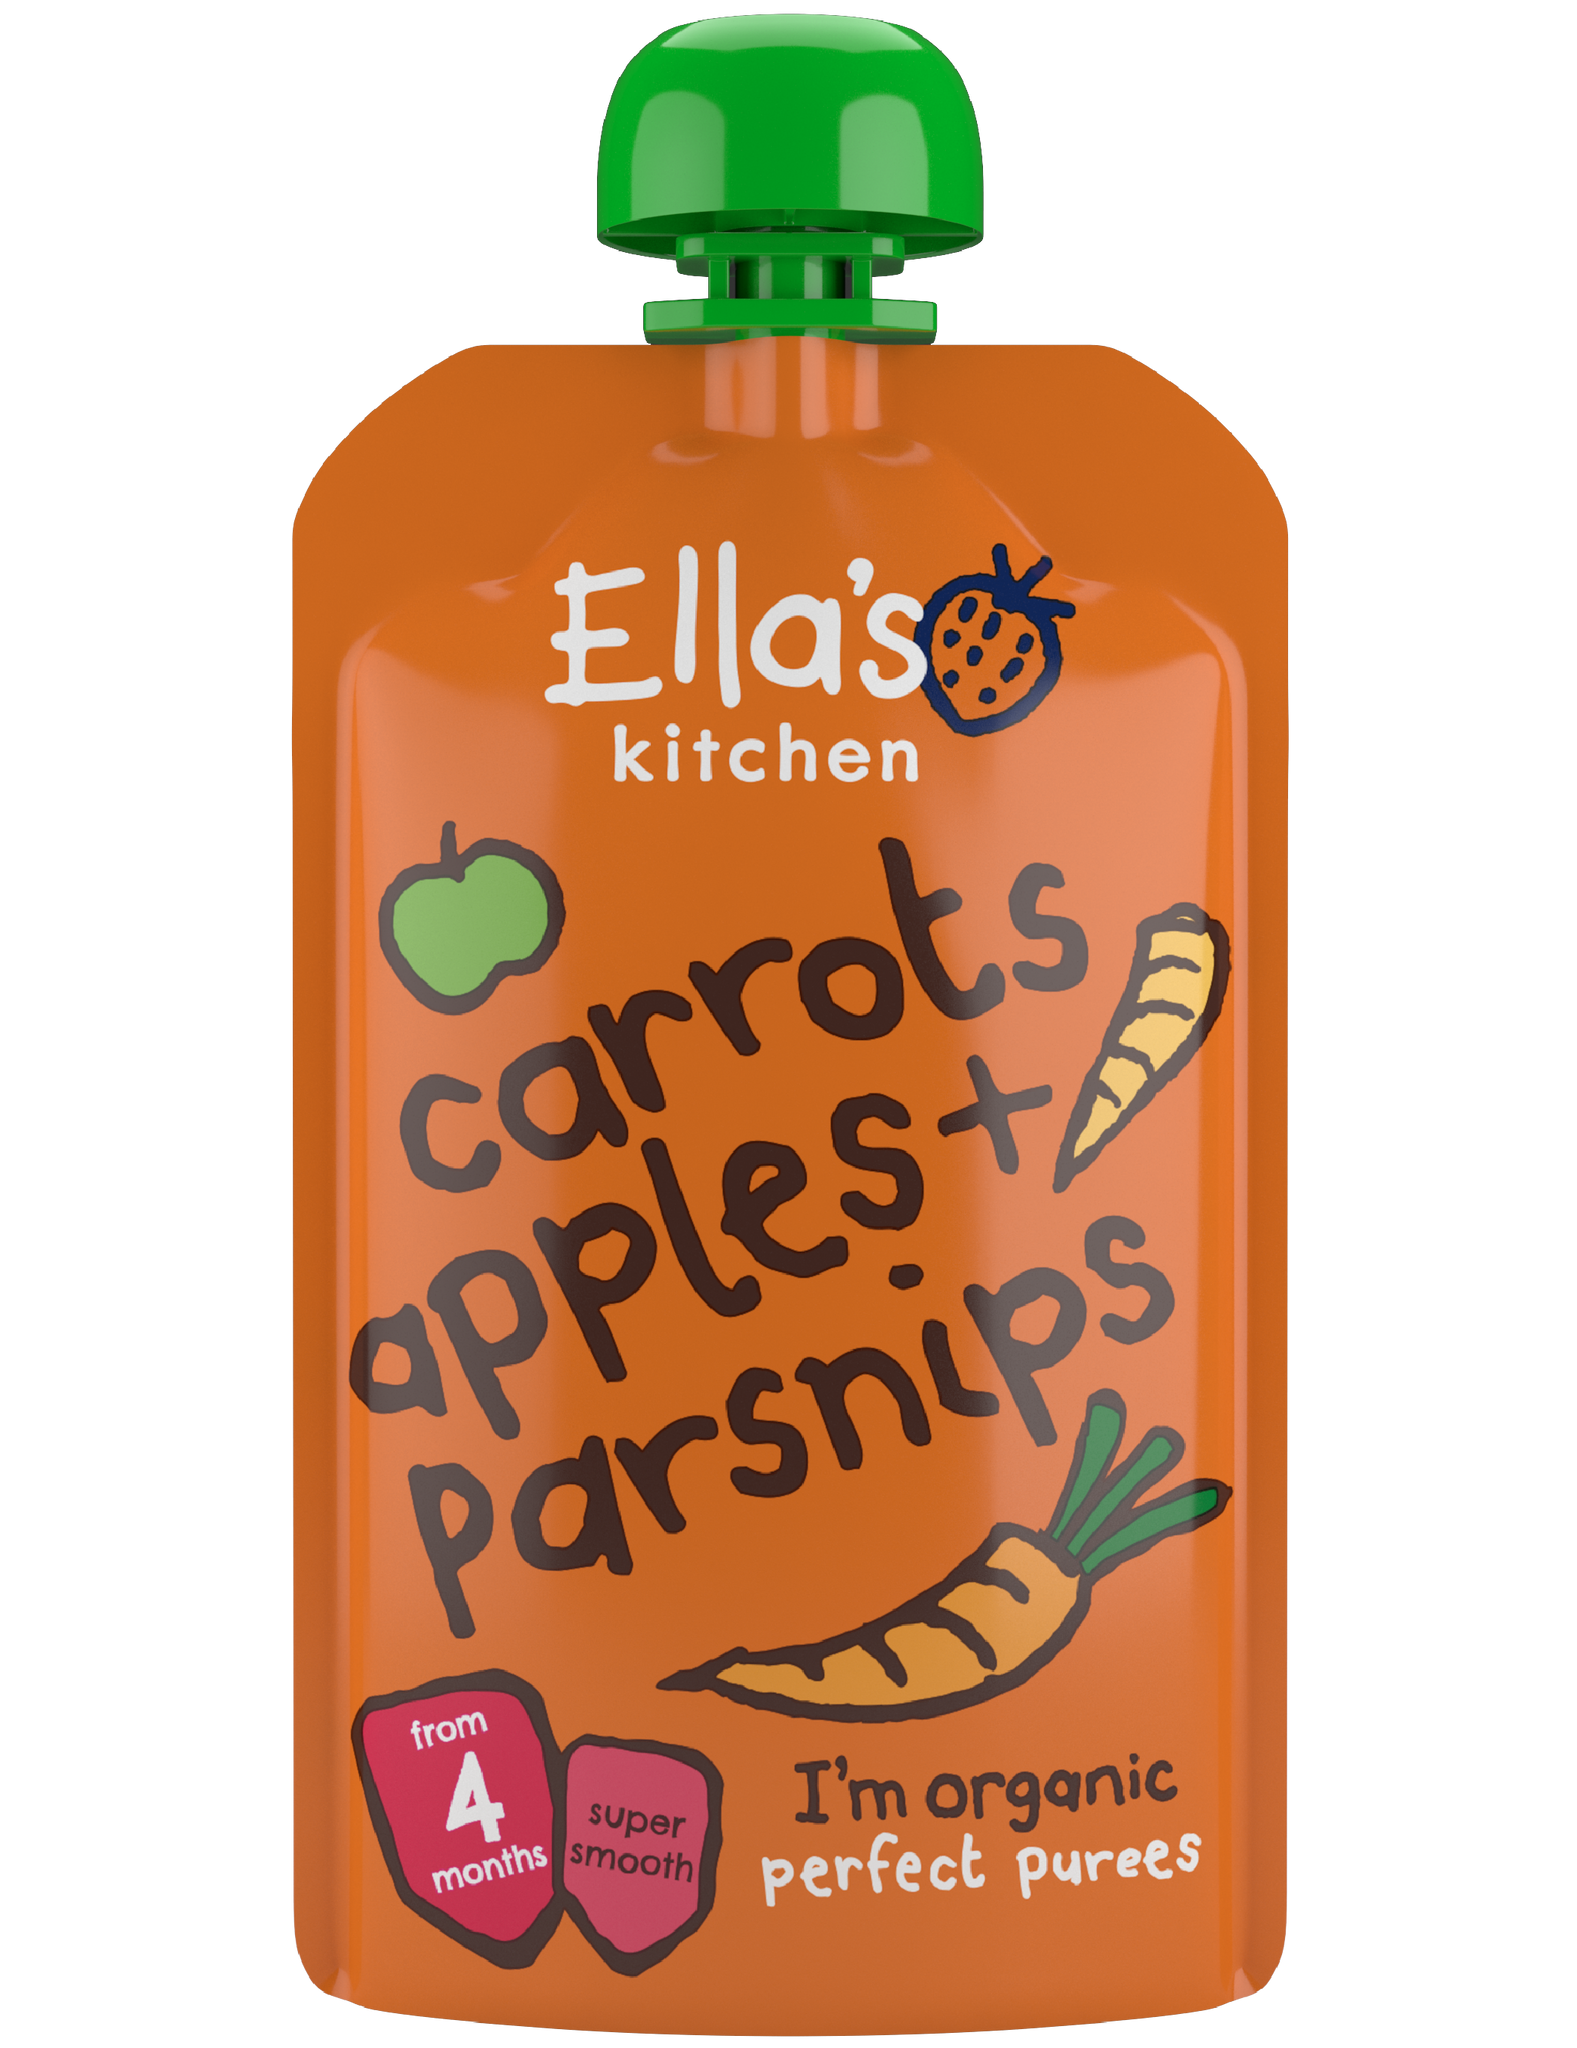 Carrots apples + parsnips